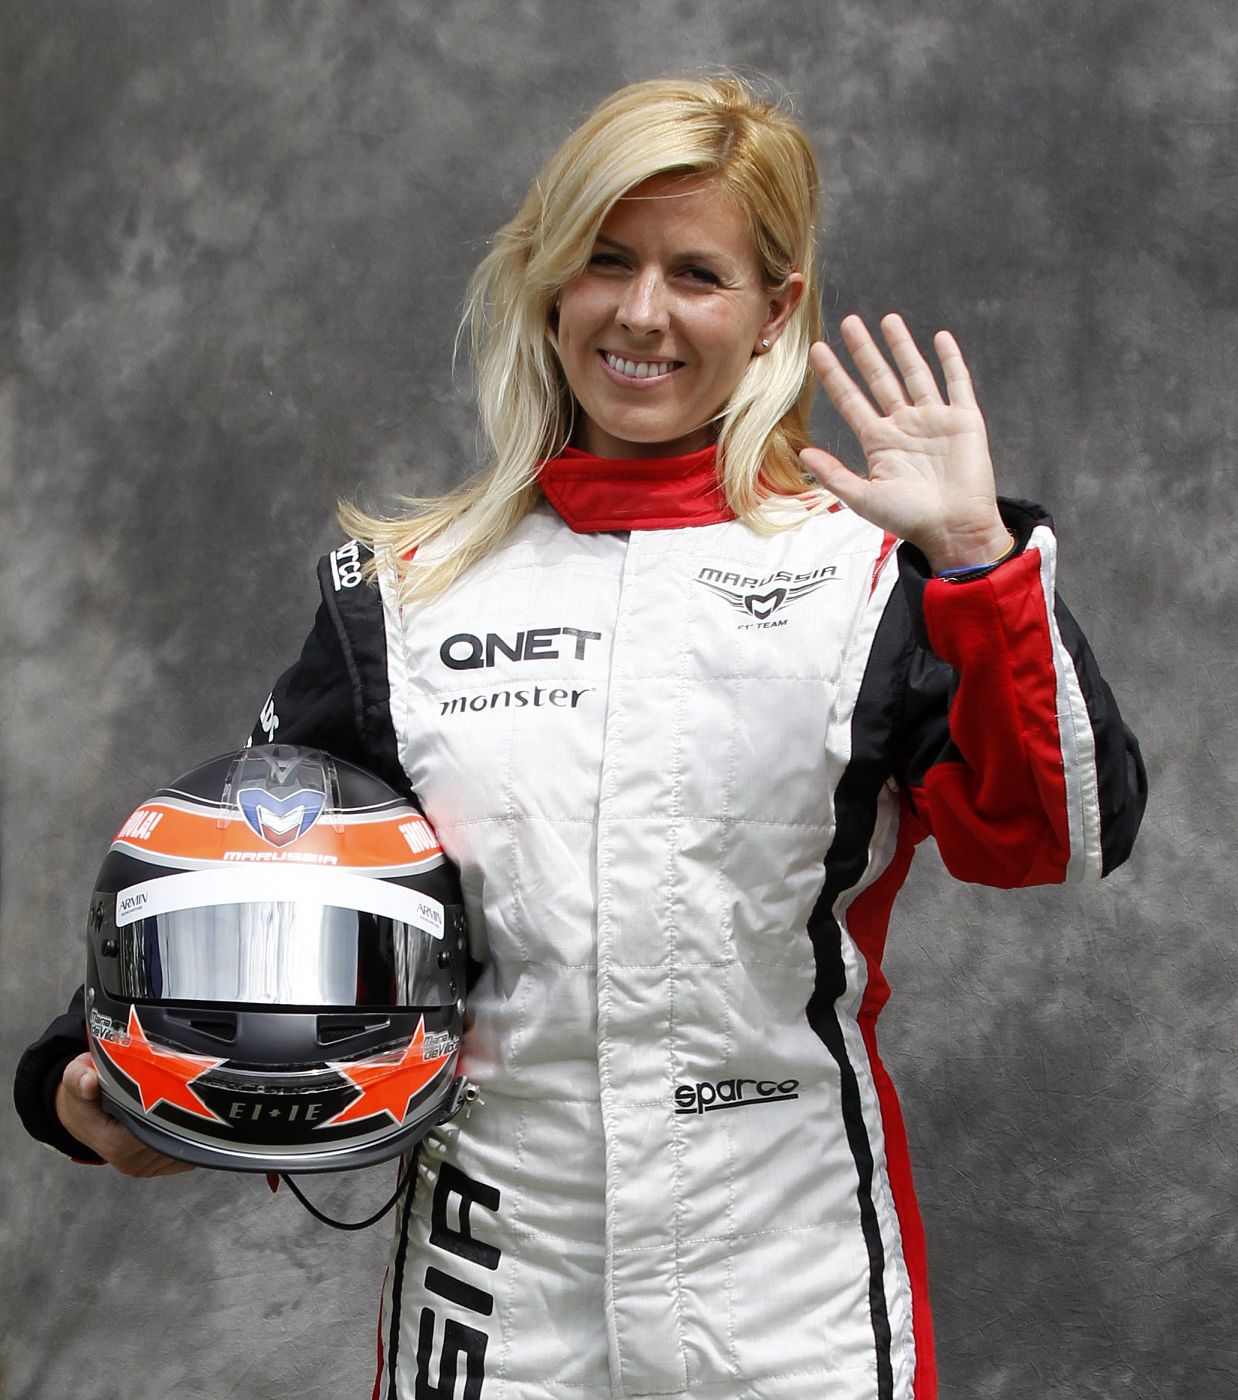 File photo of Marussia Formula One test driver Maria de Villota of Spain